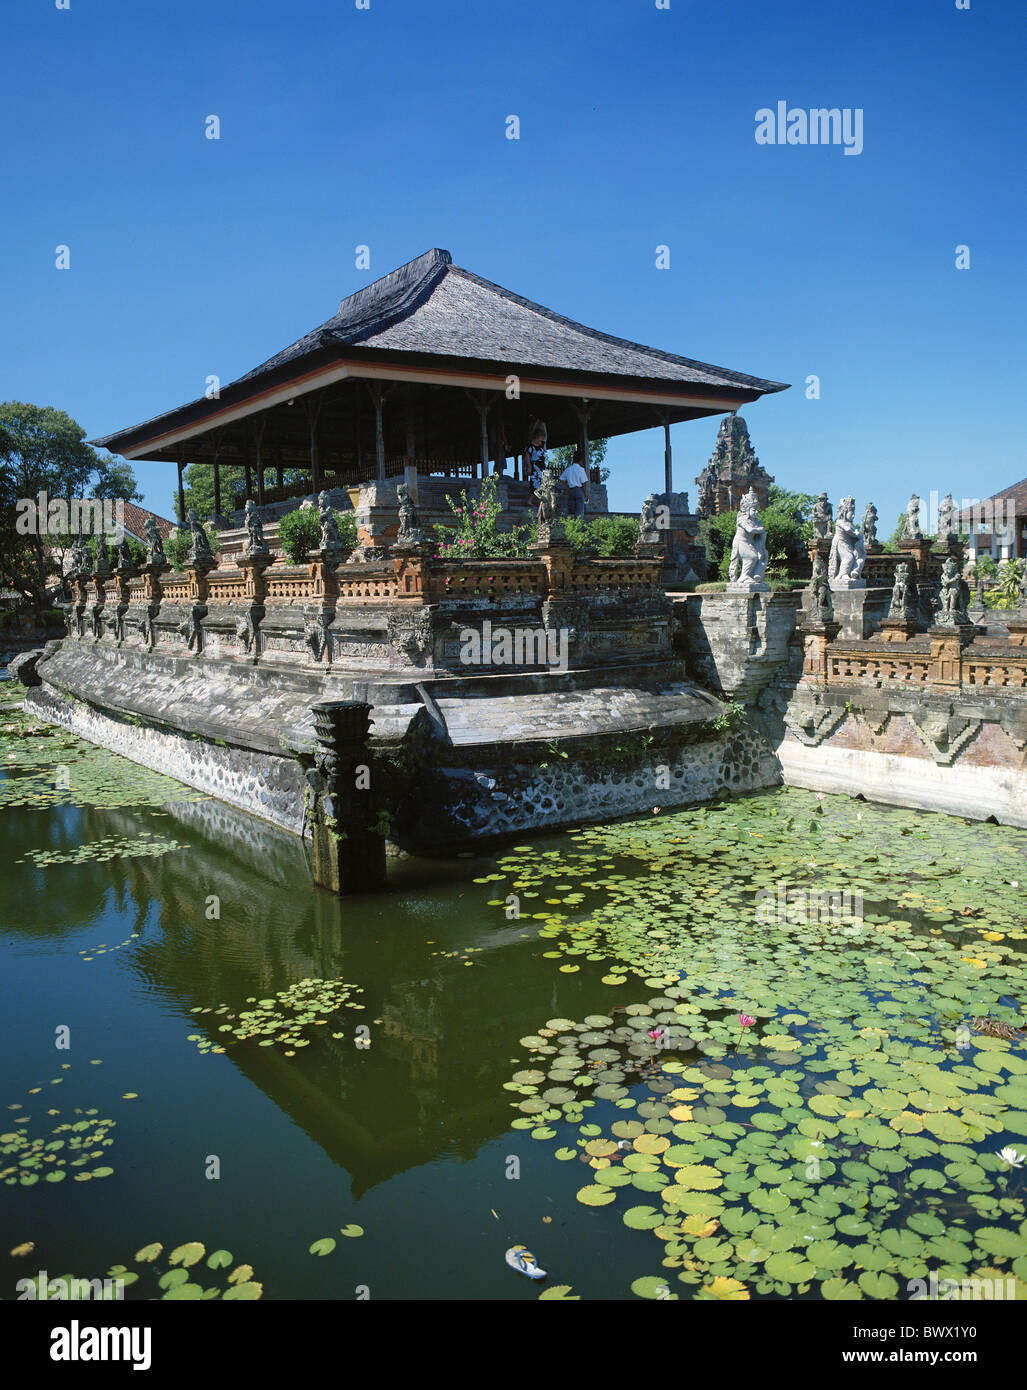 Bali Asia Klungkung water lilies sculptures Taman Gili pond temple temple arrangement Stock Photo